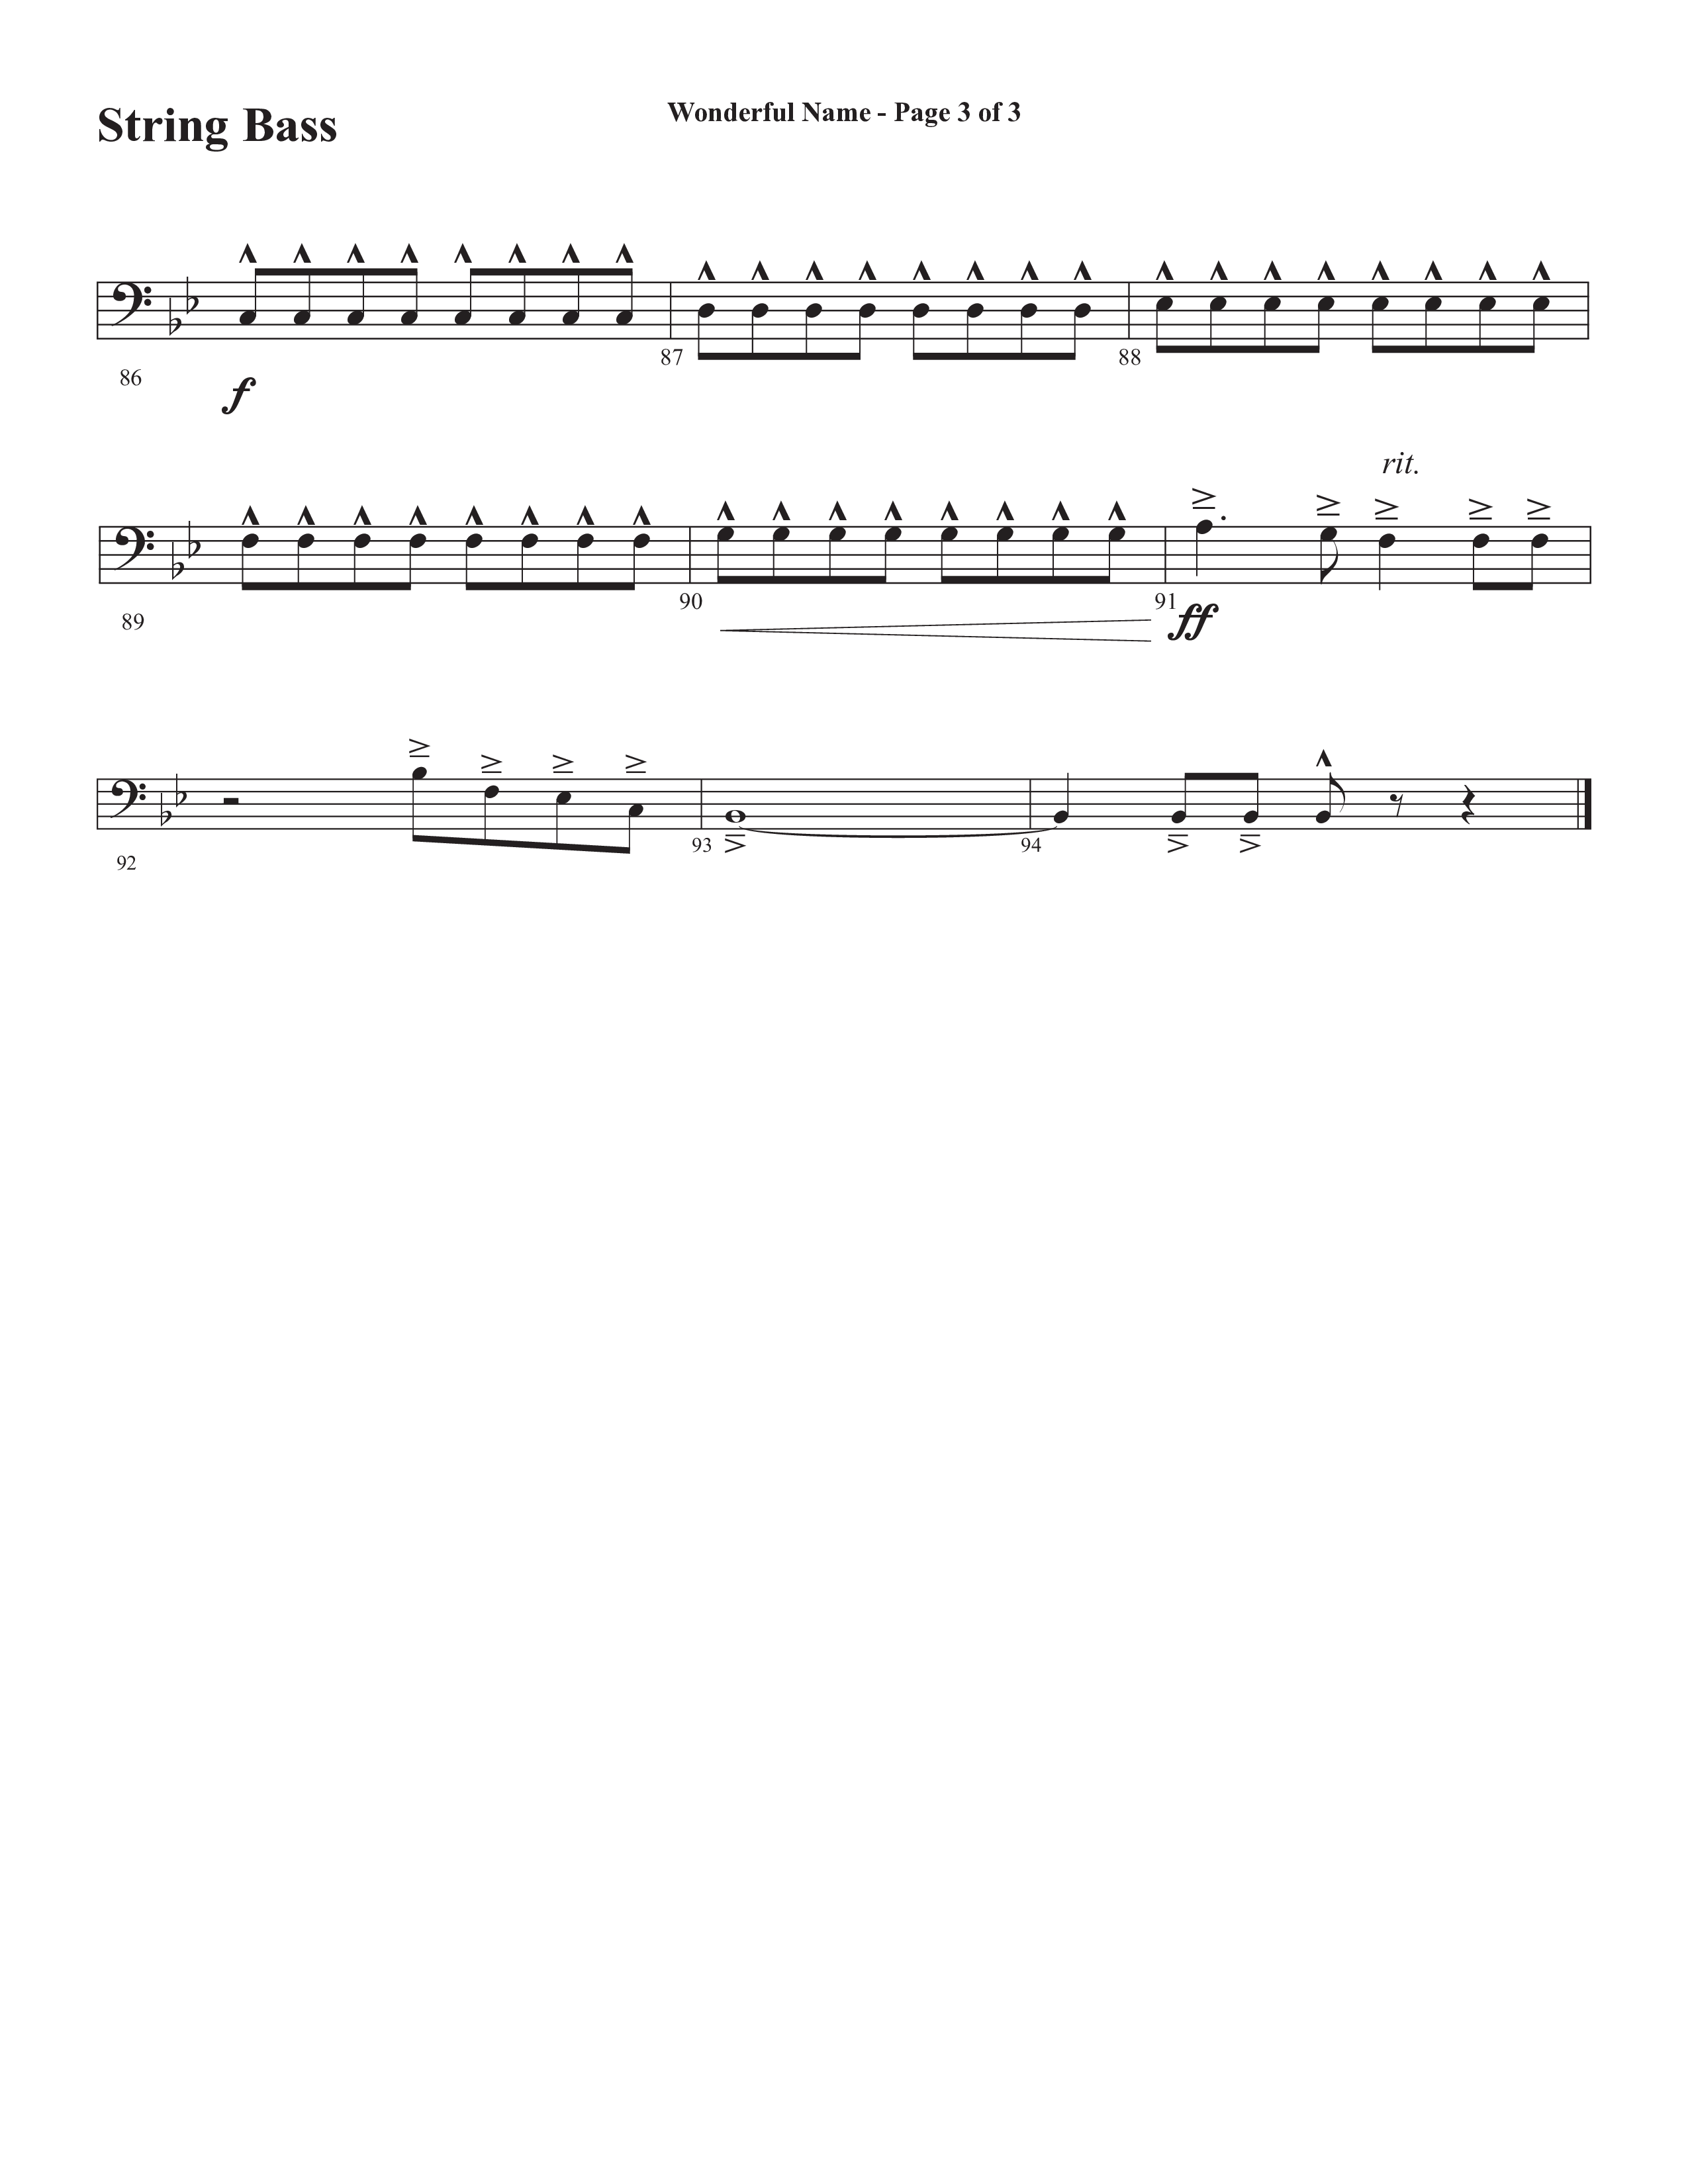 Wonderful Name (Choral Anthem SATB) String Bass (Semsen Music / Arr. John Bolin / Orch. Cliff Duren)